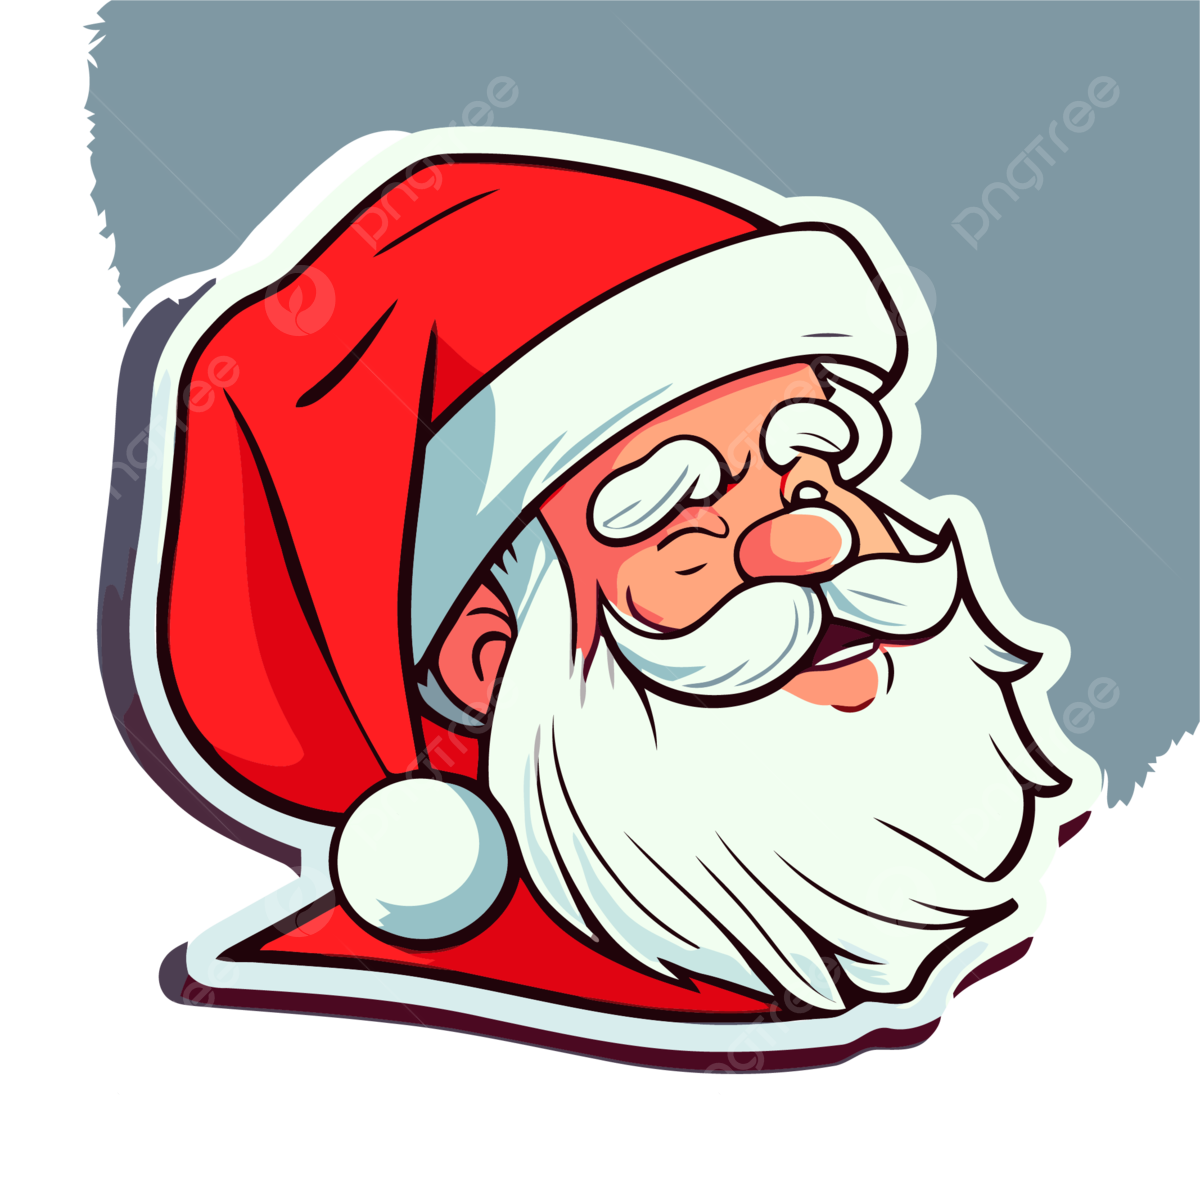 Santa claus face clipart images free download png transparent background